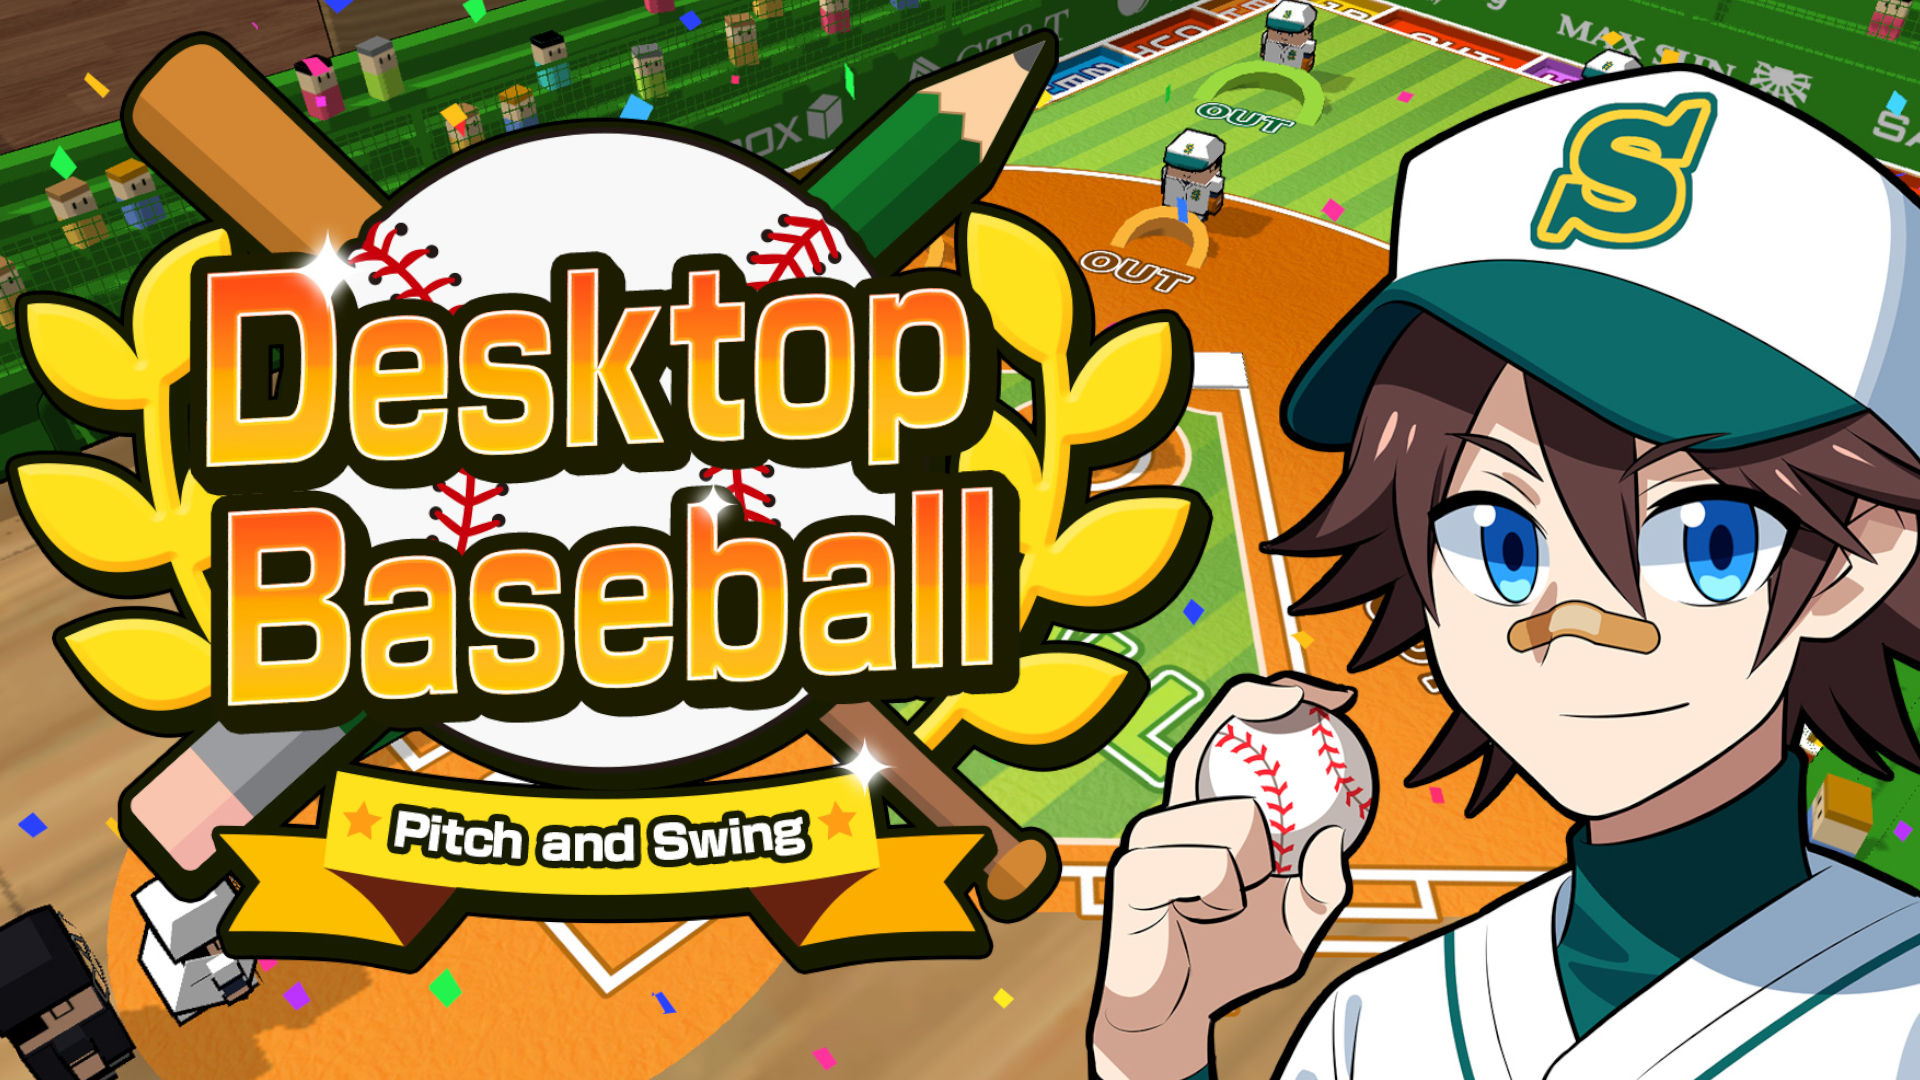 Baseball Desk Cover, one of the original baseball games on Switch